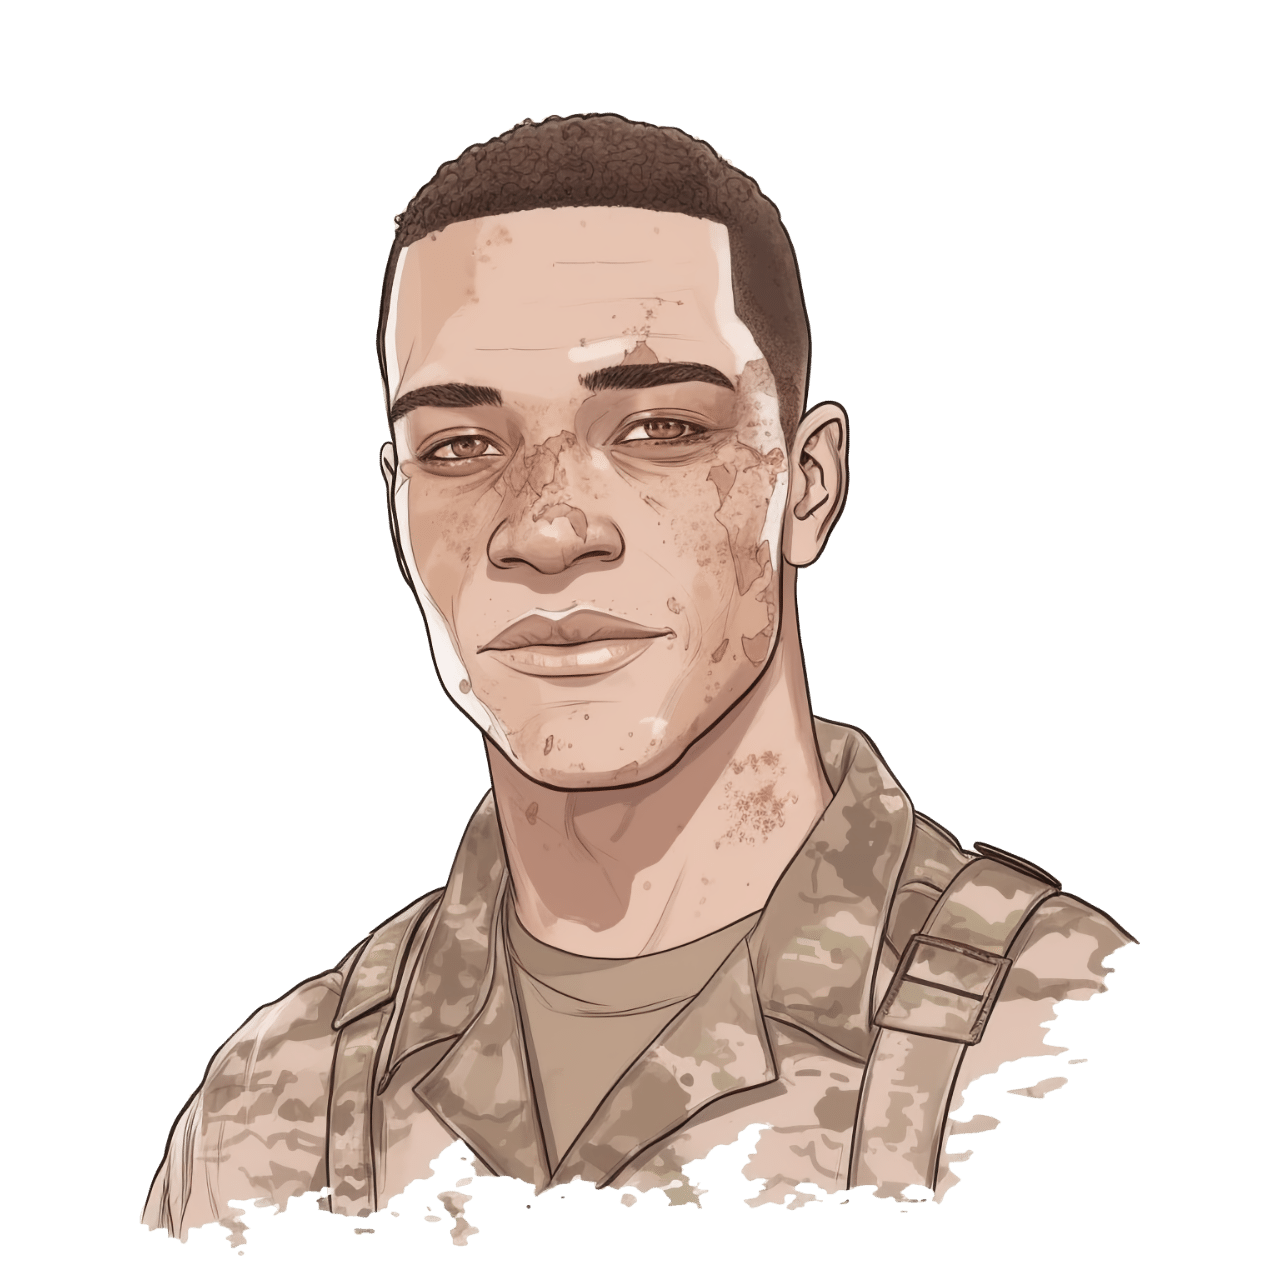 Military serviceman with vitiligo